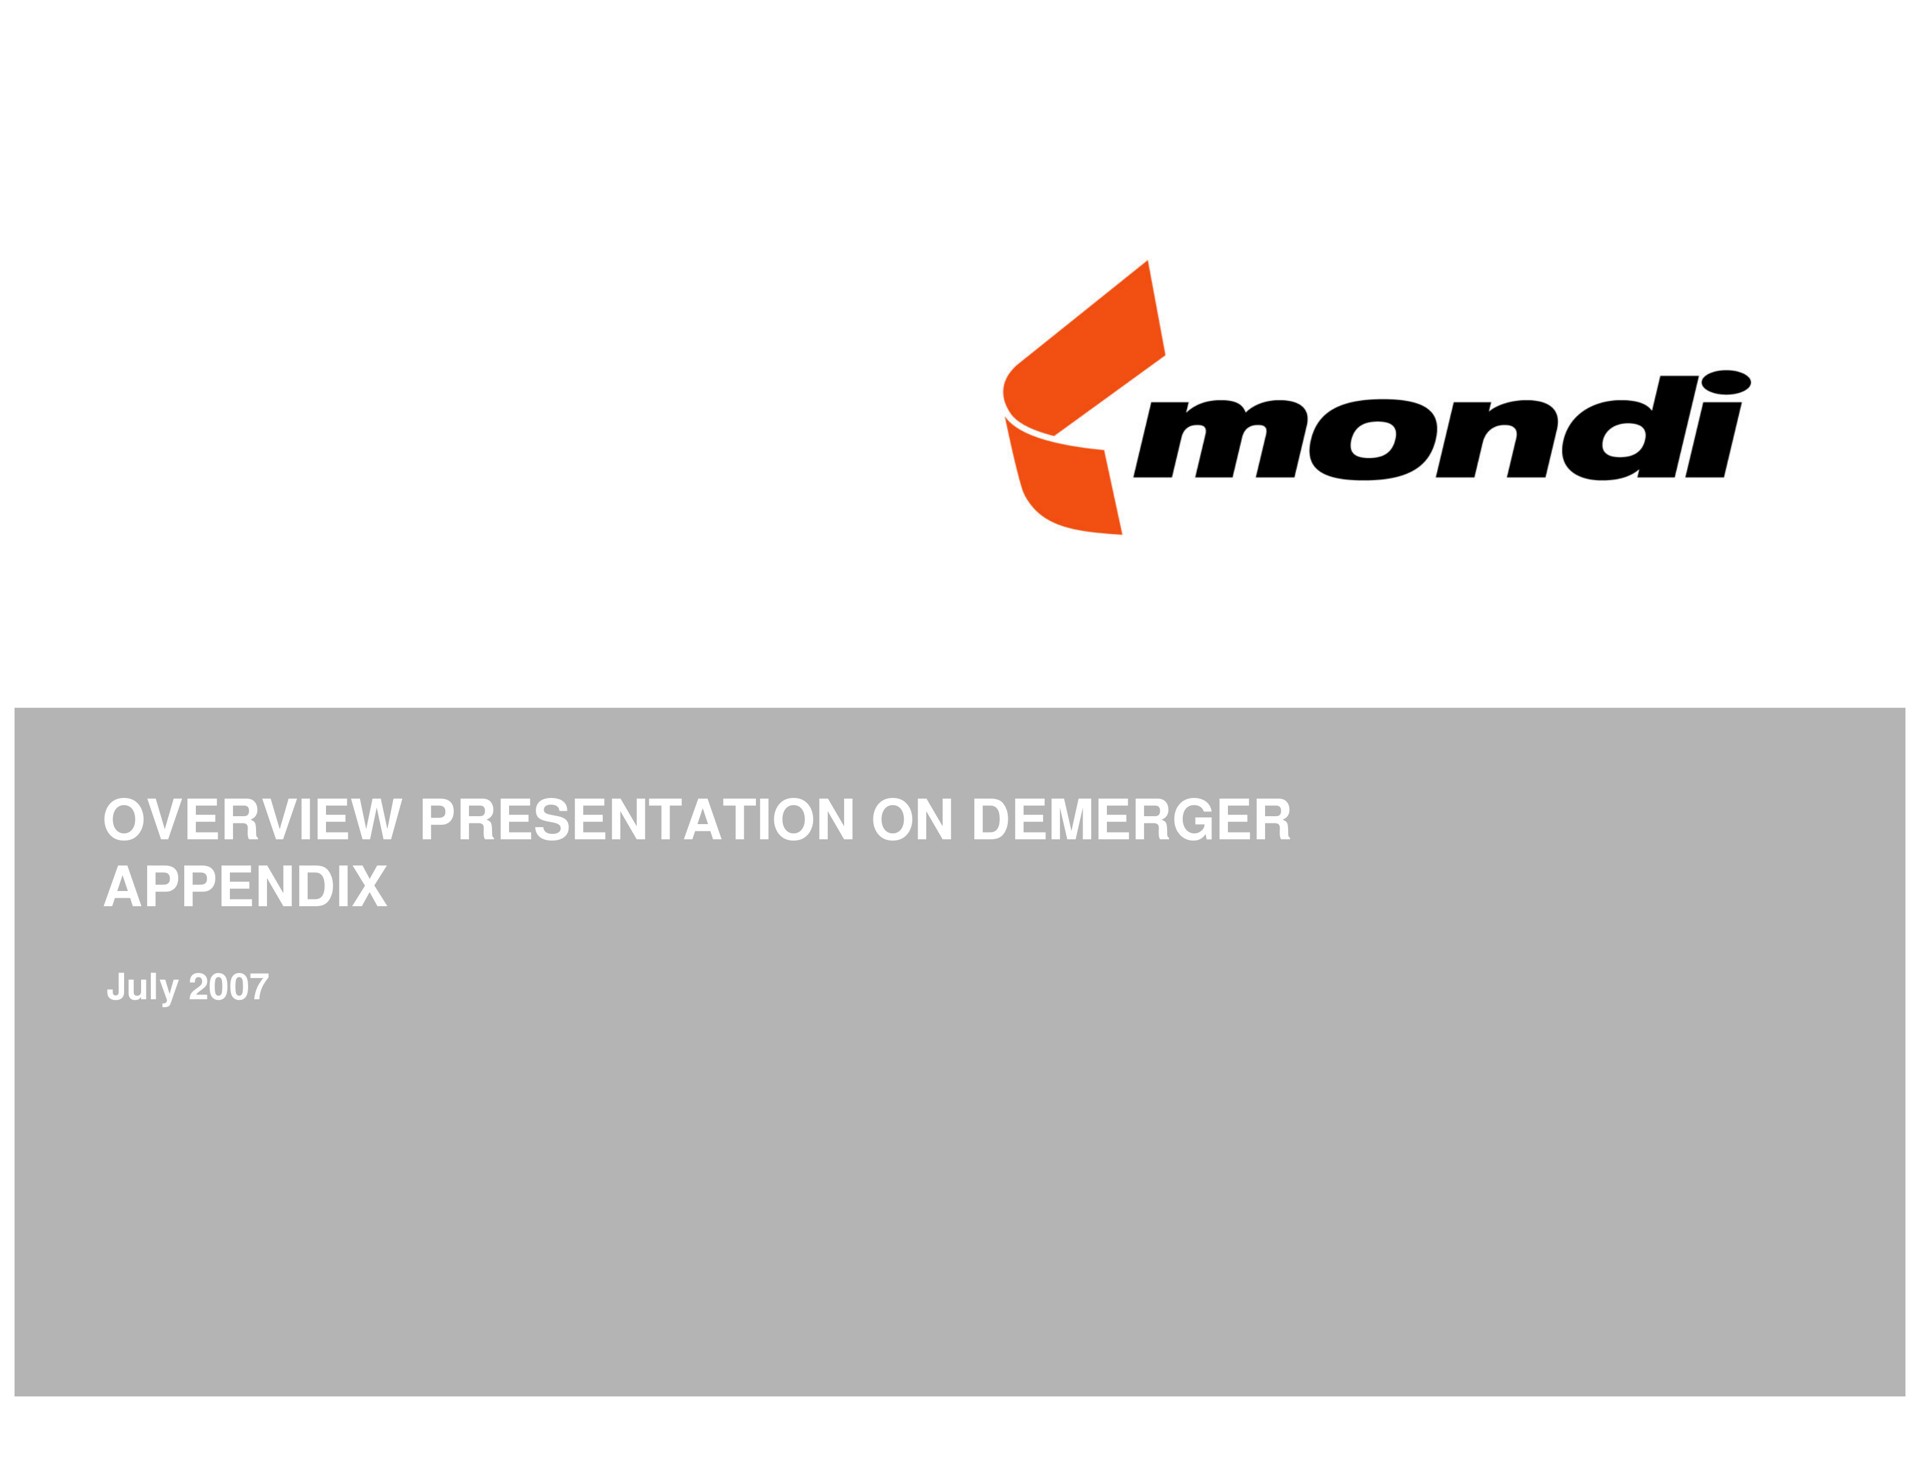 overview presentation on appendix | Mondi